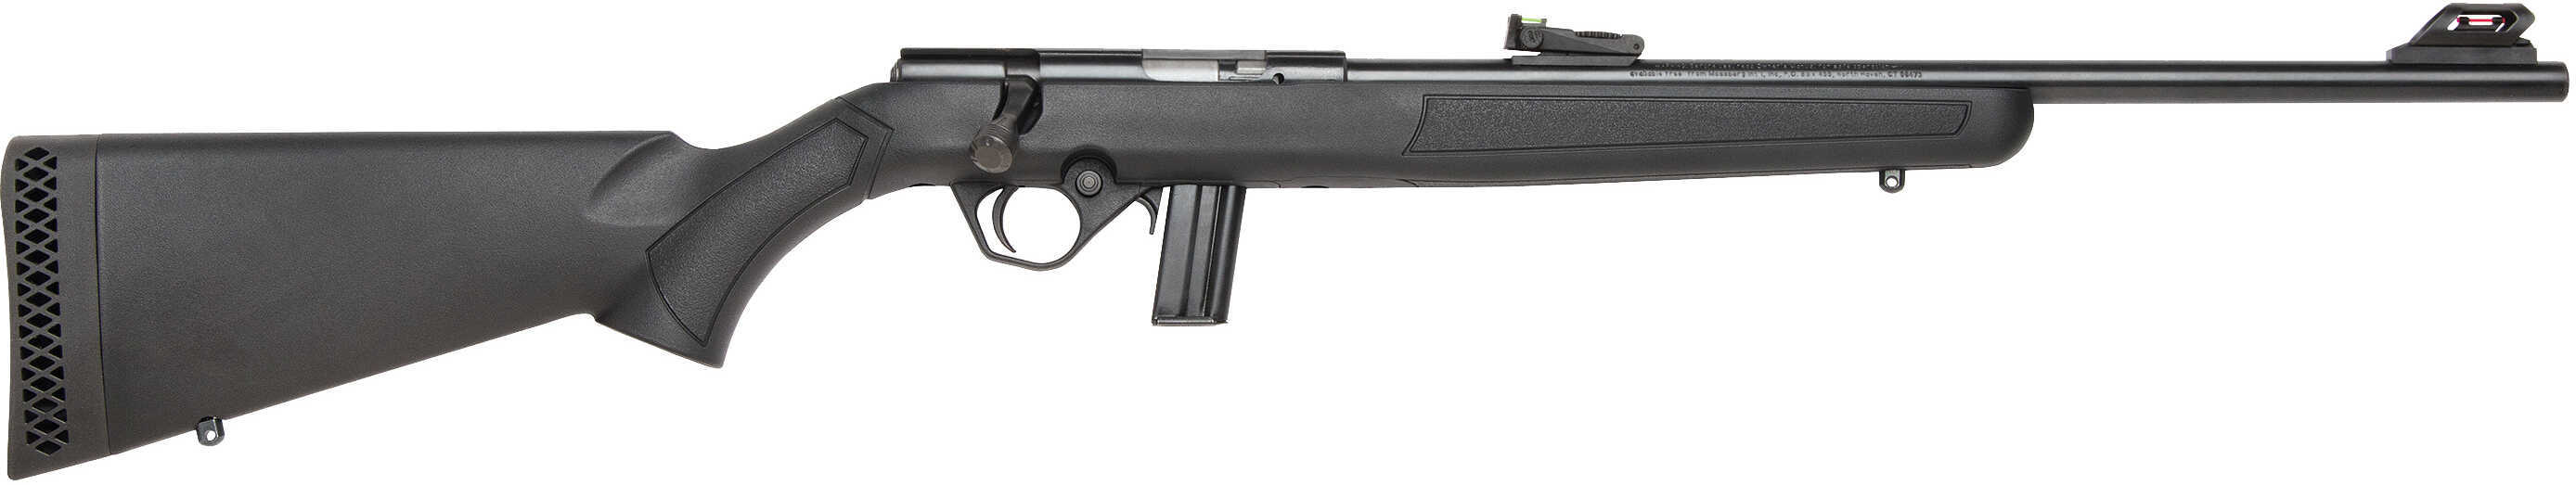 Mossberg International 802 Plinkster Bolt Action Rifle .22LR 18" Barrel 10 Round Capacity